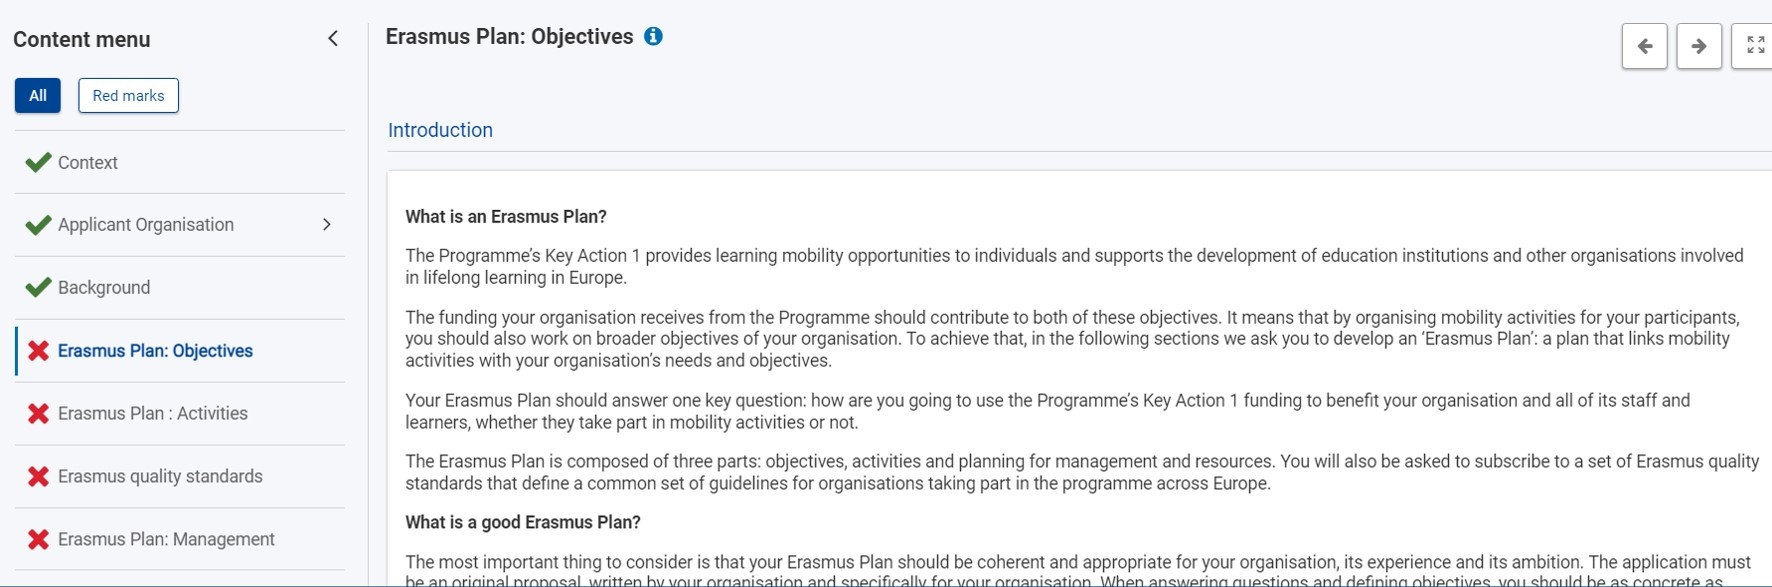 Open Erasmus Plan Objectives